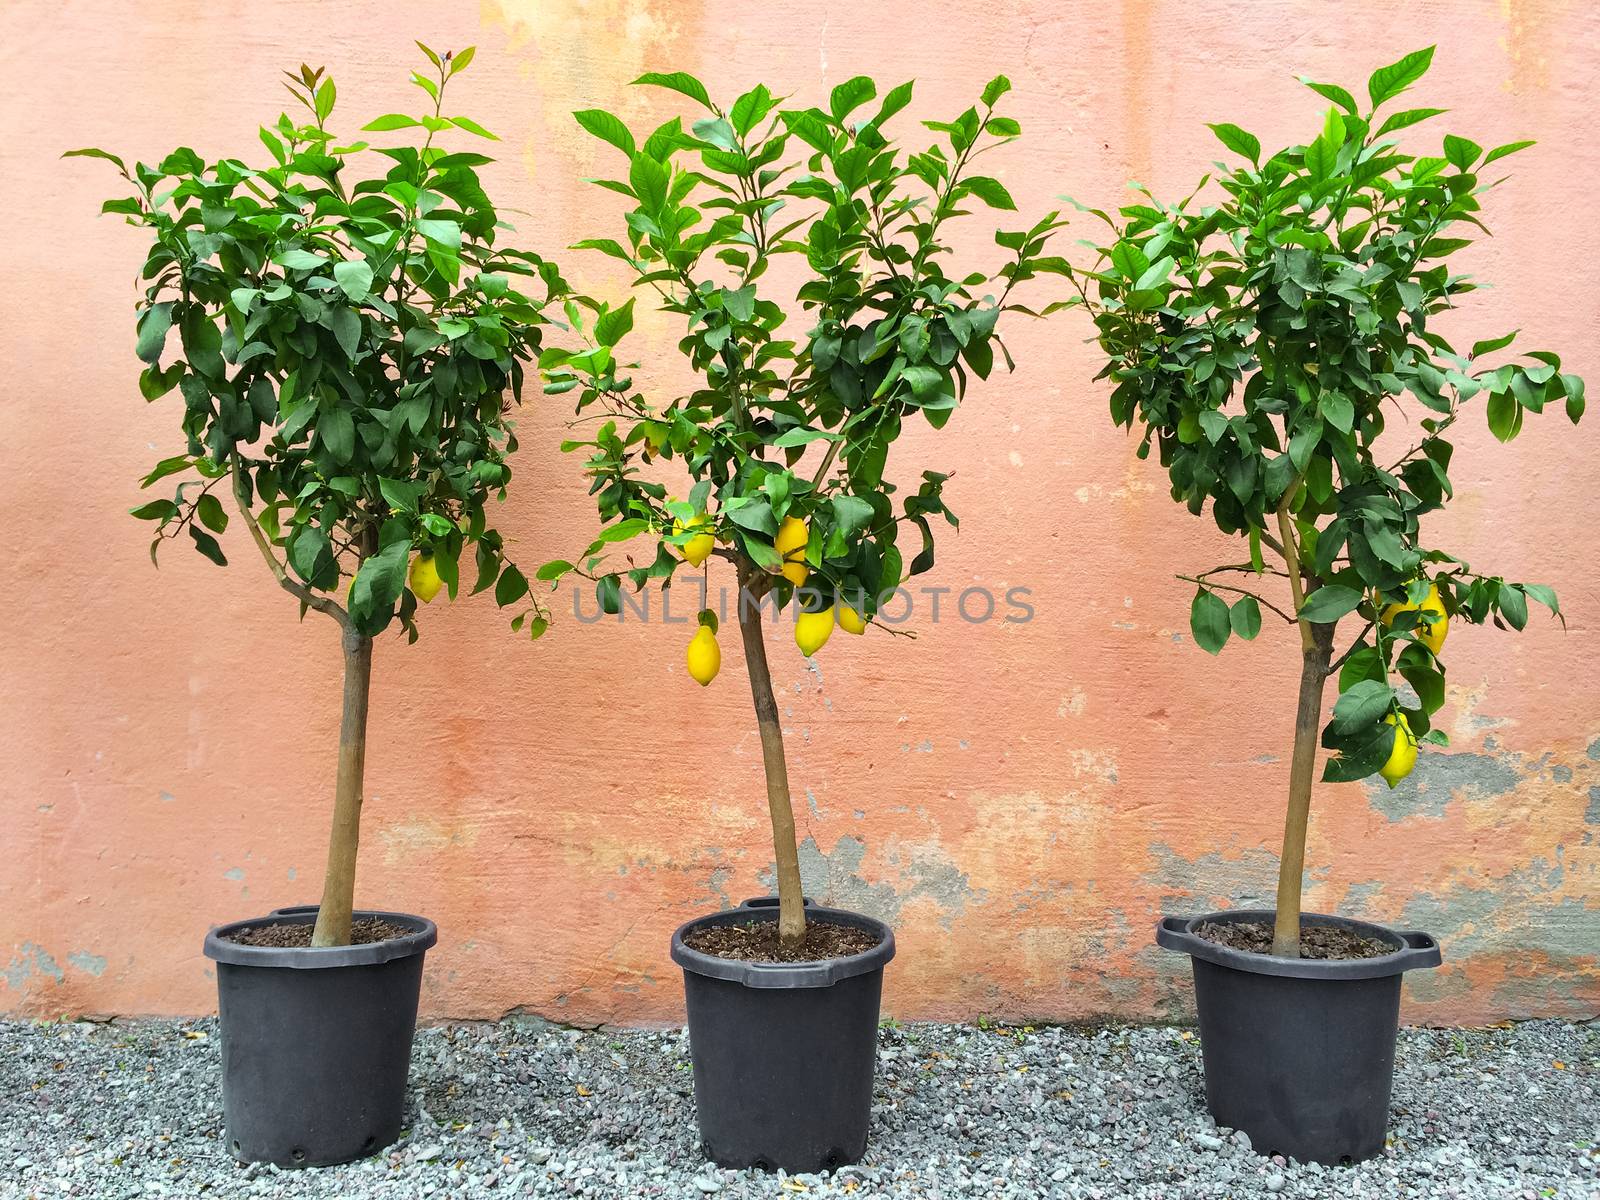 Lemon trees with ripe fruits by anikasalsera